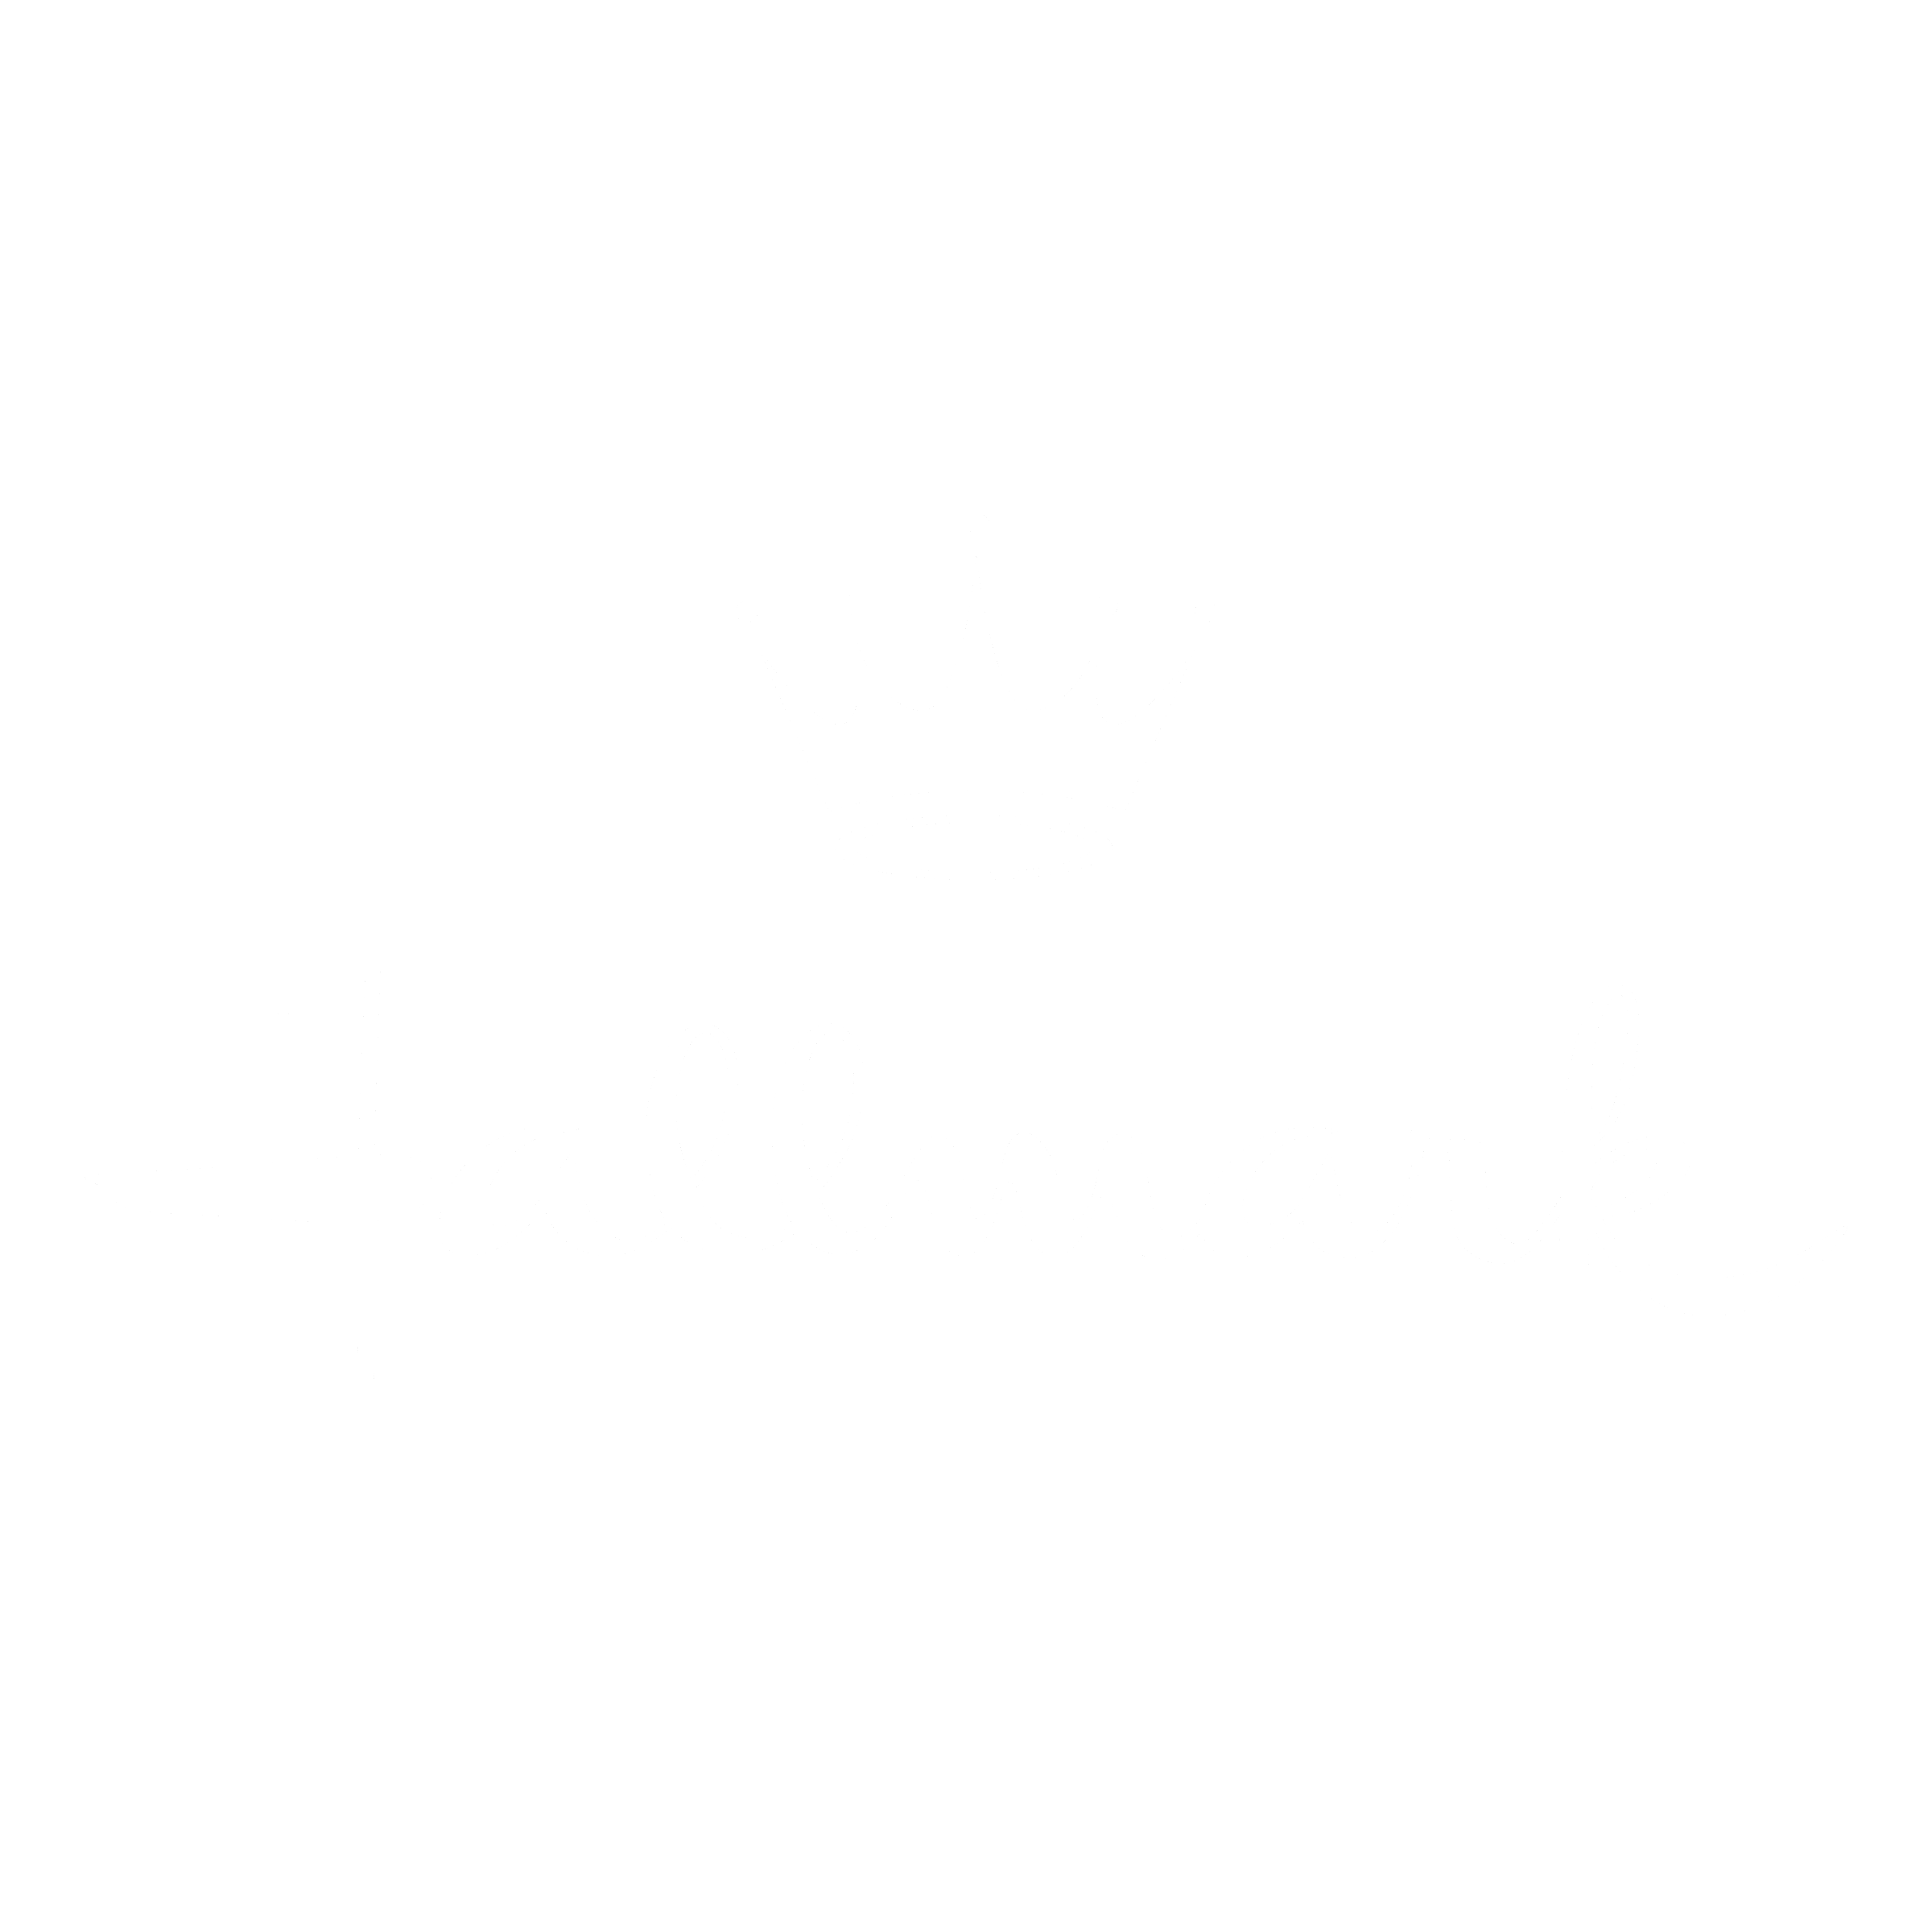 Halmmark Logo - Hallmark Logo PNG Transparent & SVG Vector - Freebie Supply